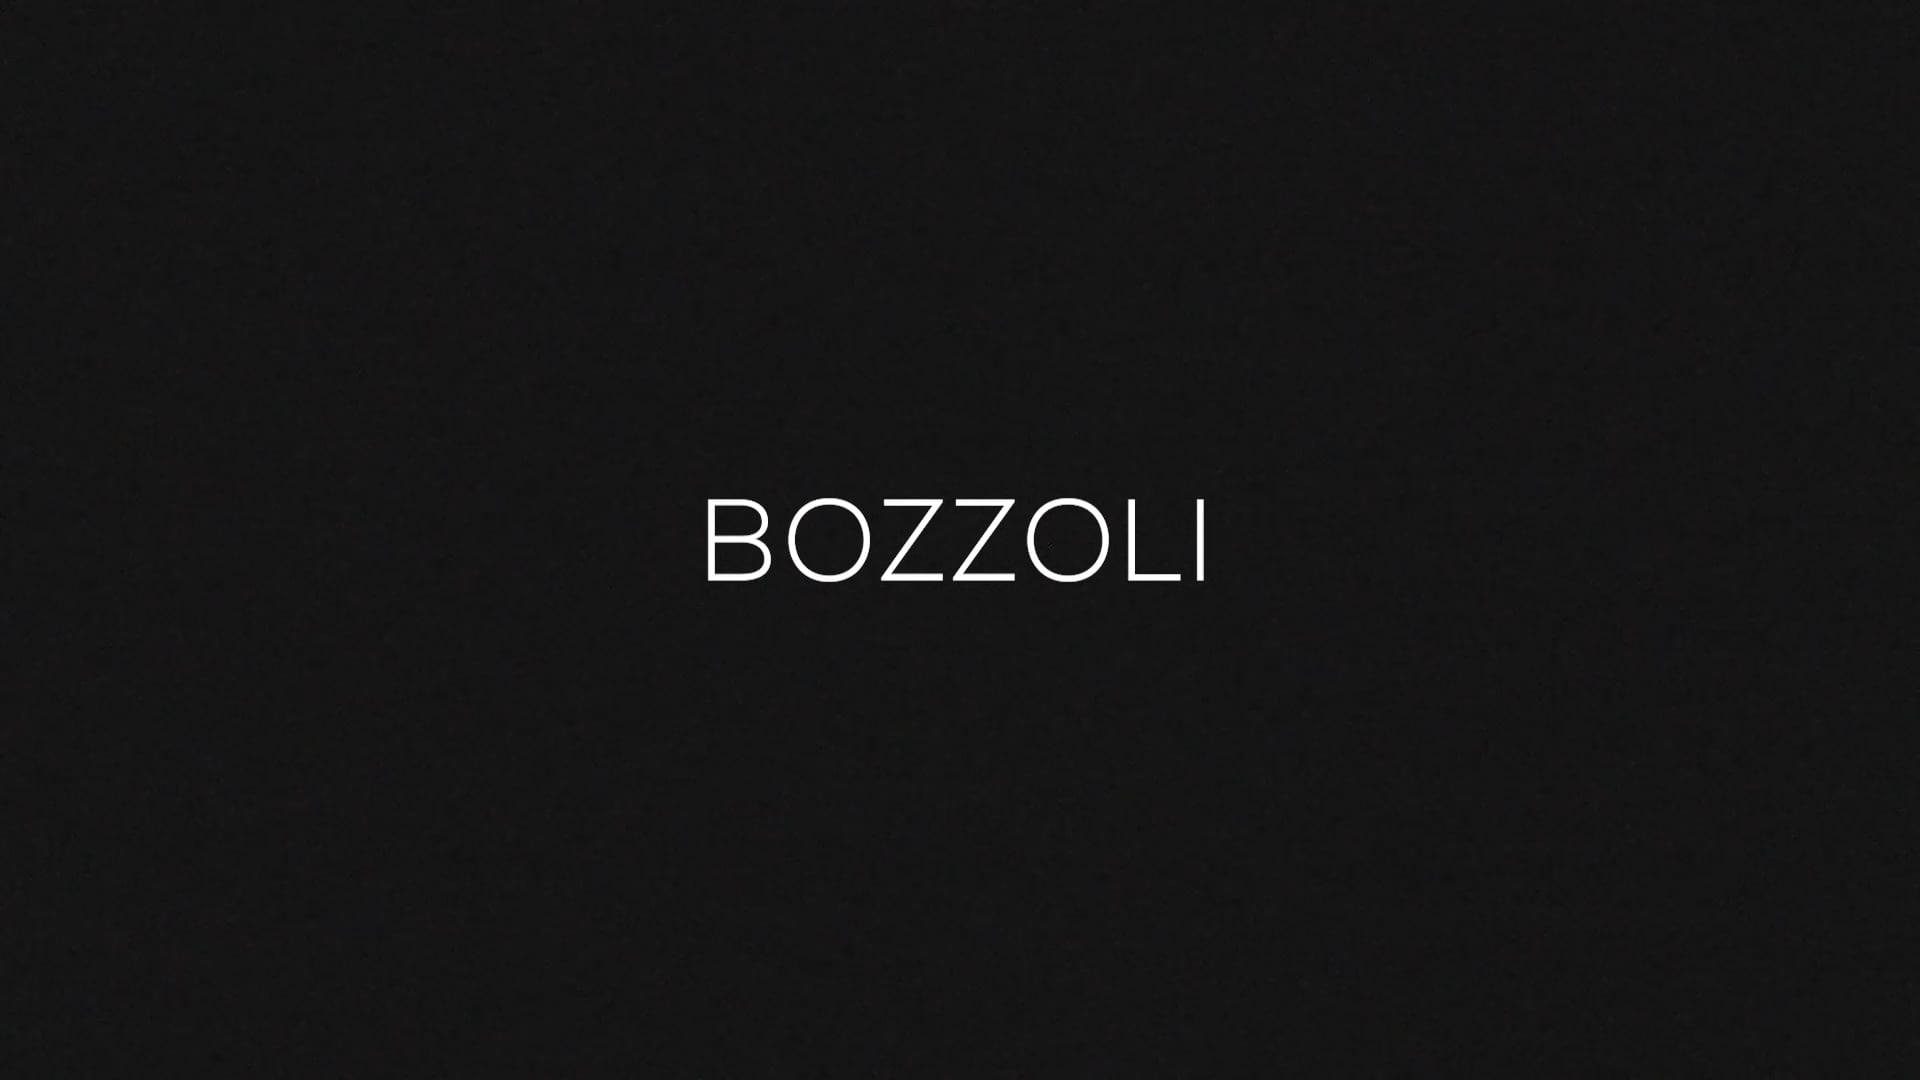 Bozzoli - Créature Ingrate